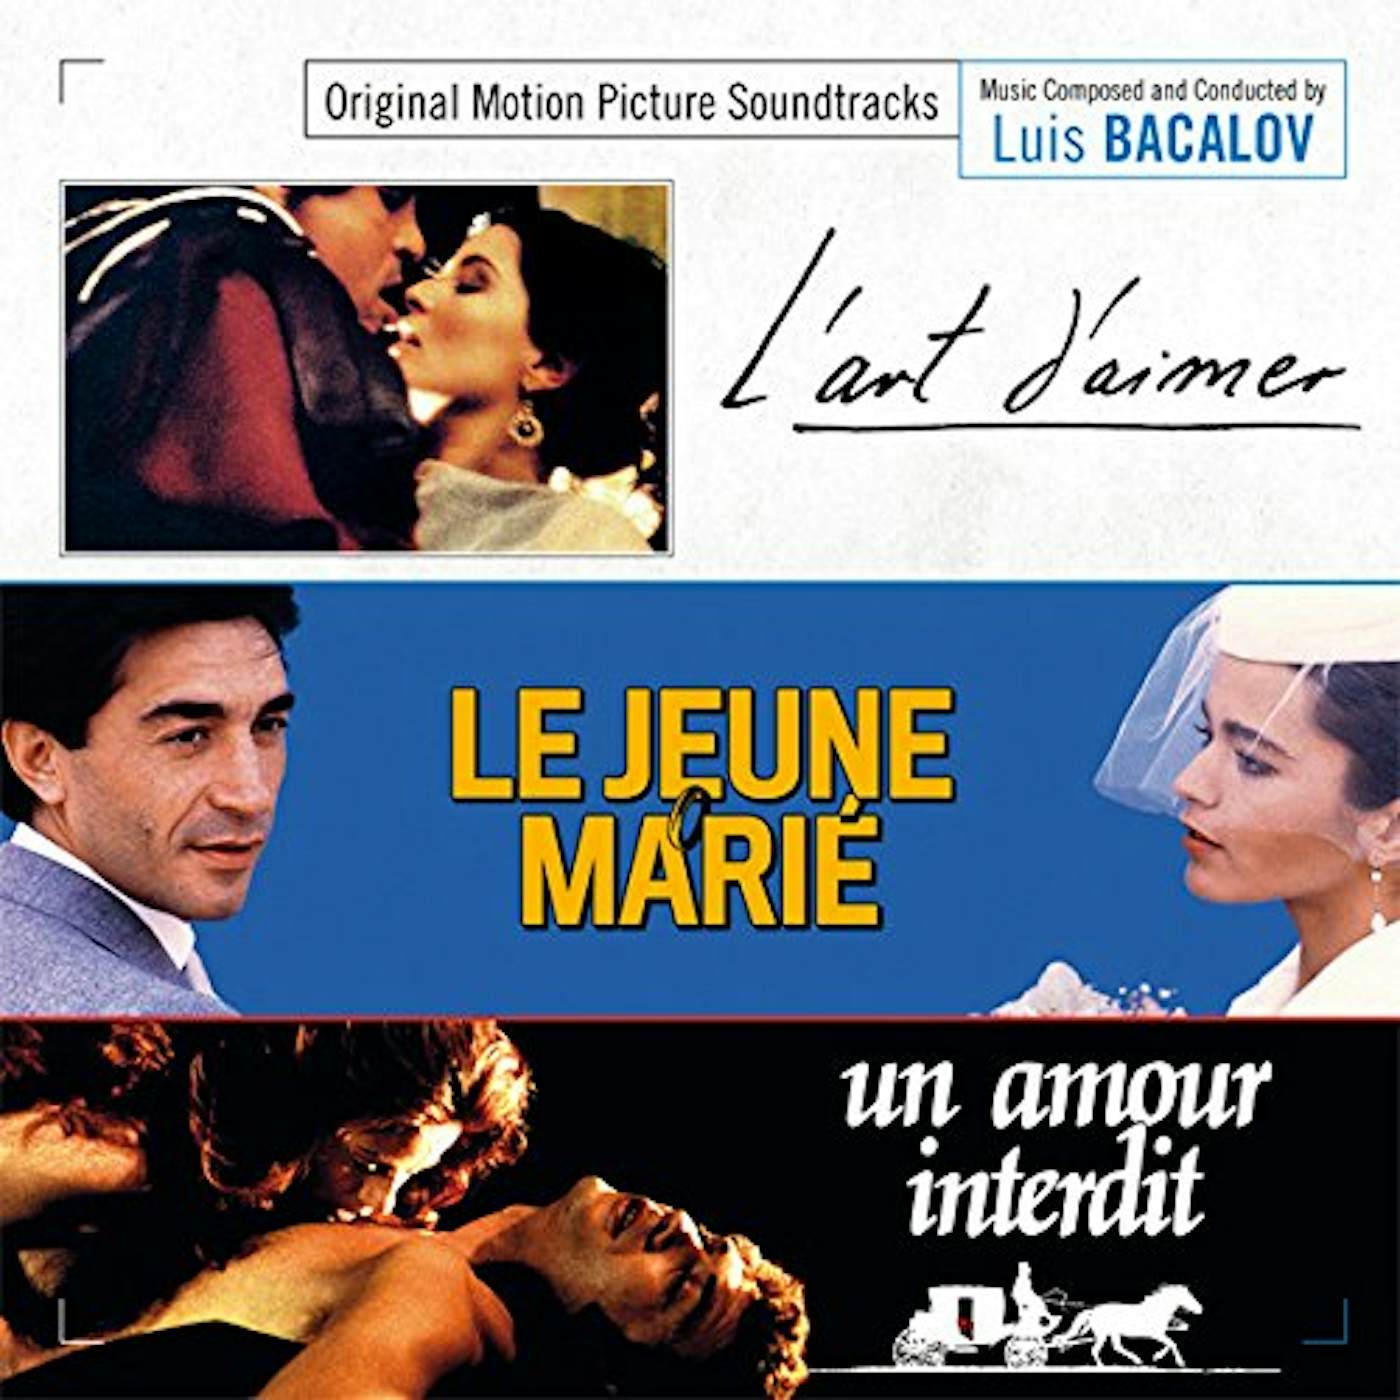 Luis Bacalov ART OF LOVE / YOUNG BRIDEGROOM / STRANGE PASSION CD